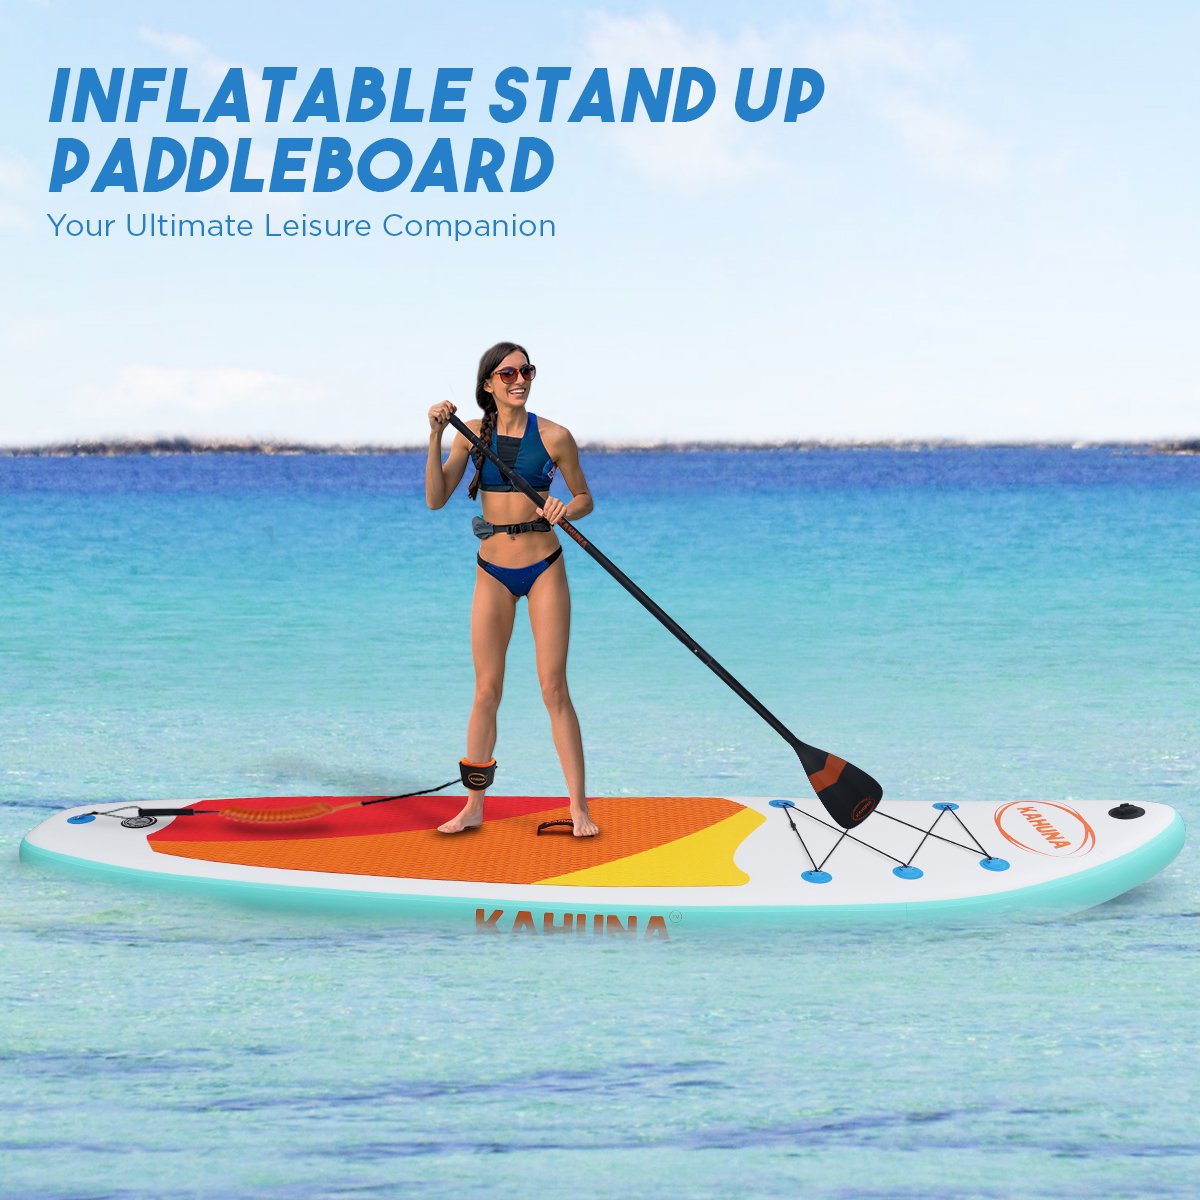 Kahuna Hana Inflatable Stand Up Paddle Board 11FT SUP Paddleboard - SILBERSHELL